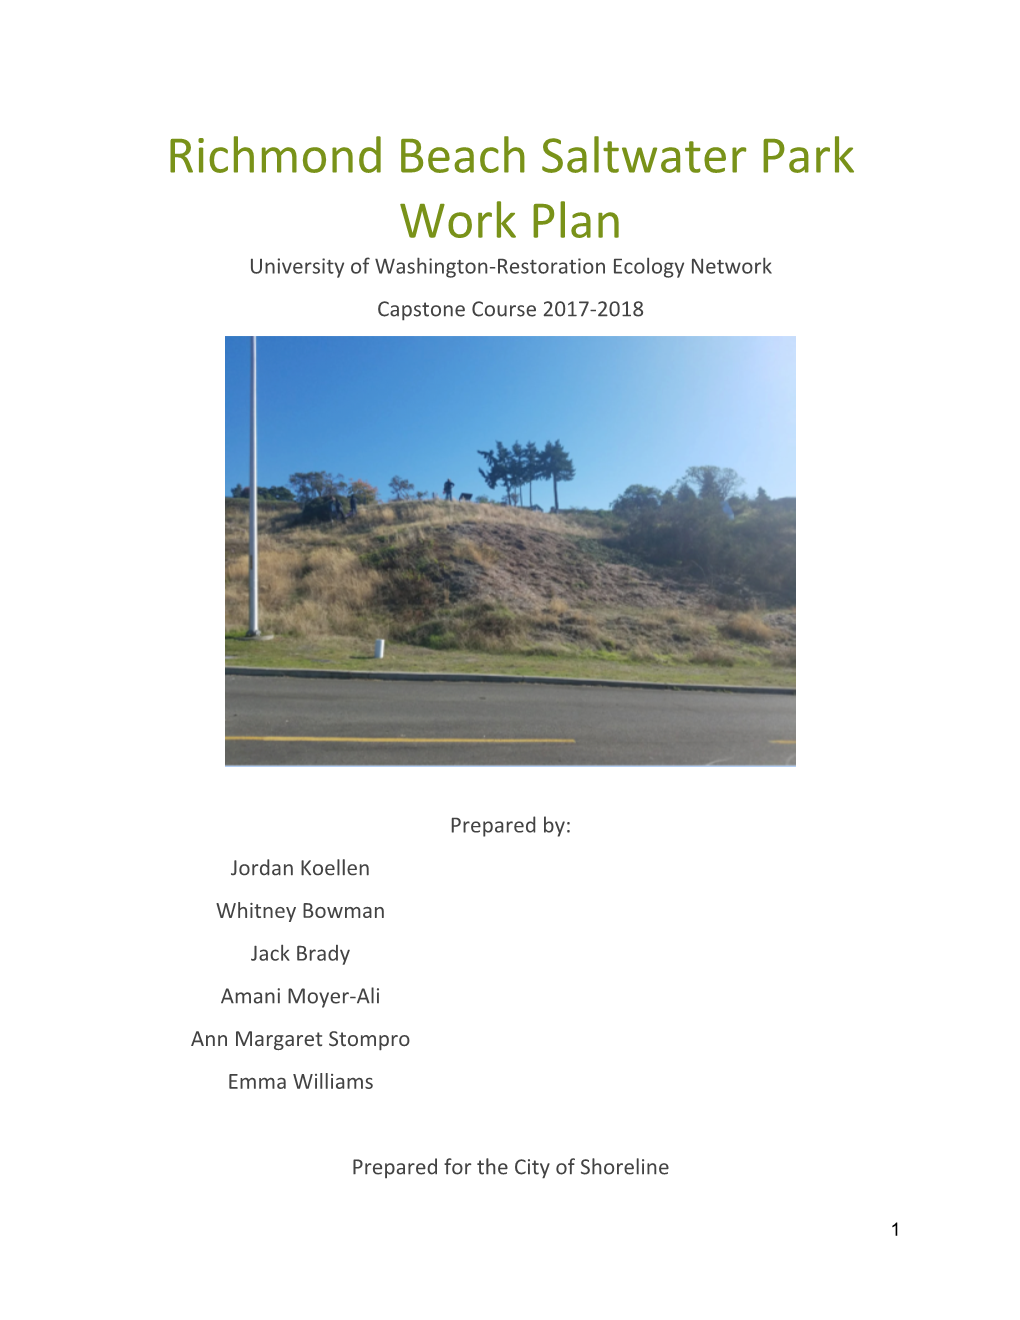 Richmond Beach Saltwater Park Work Plan University of Washington-Restoration Ecology Network Capstone Course 2017-2018